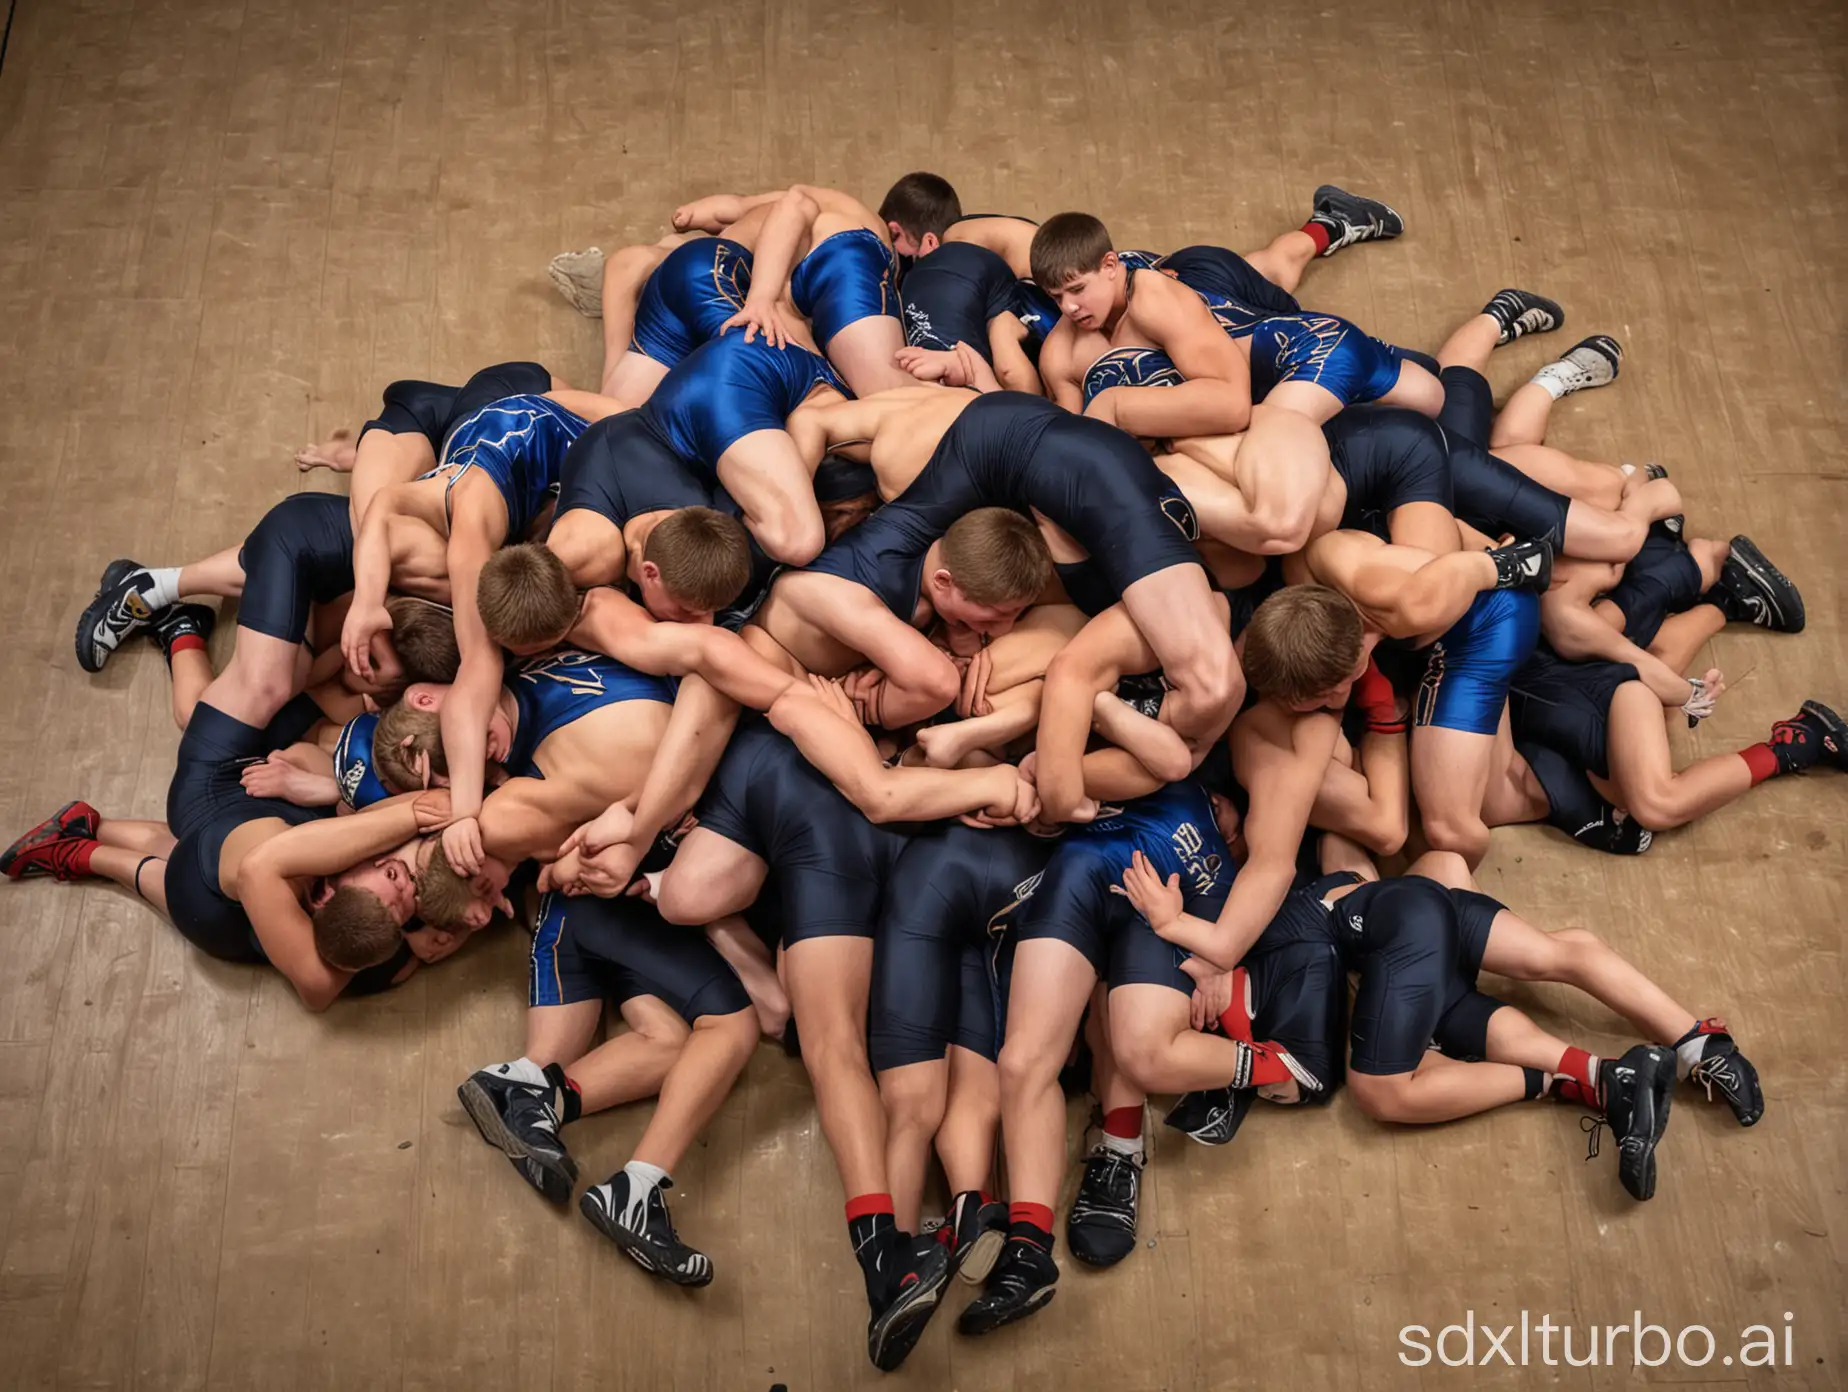 Group-of-Athletic-Teenage-Boys-Wrestling-Piled-on-Floor